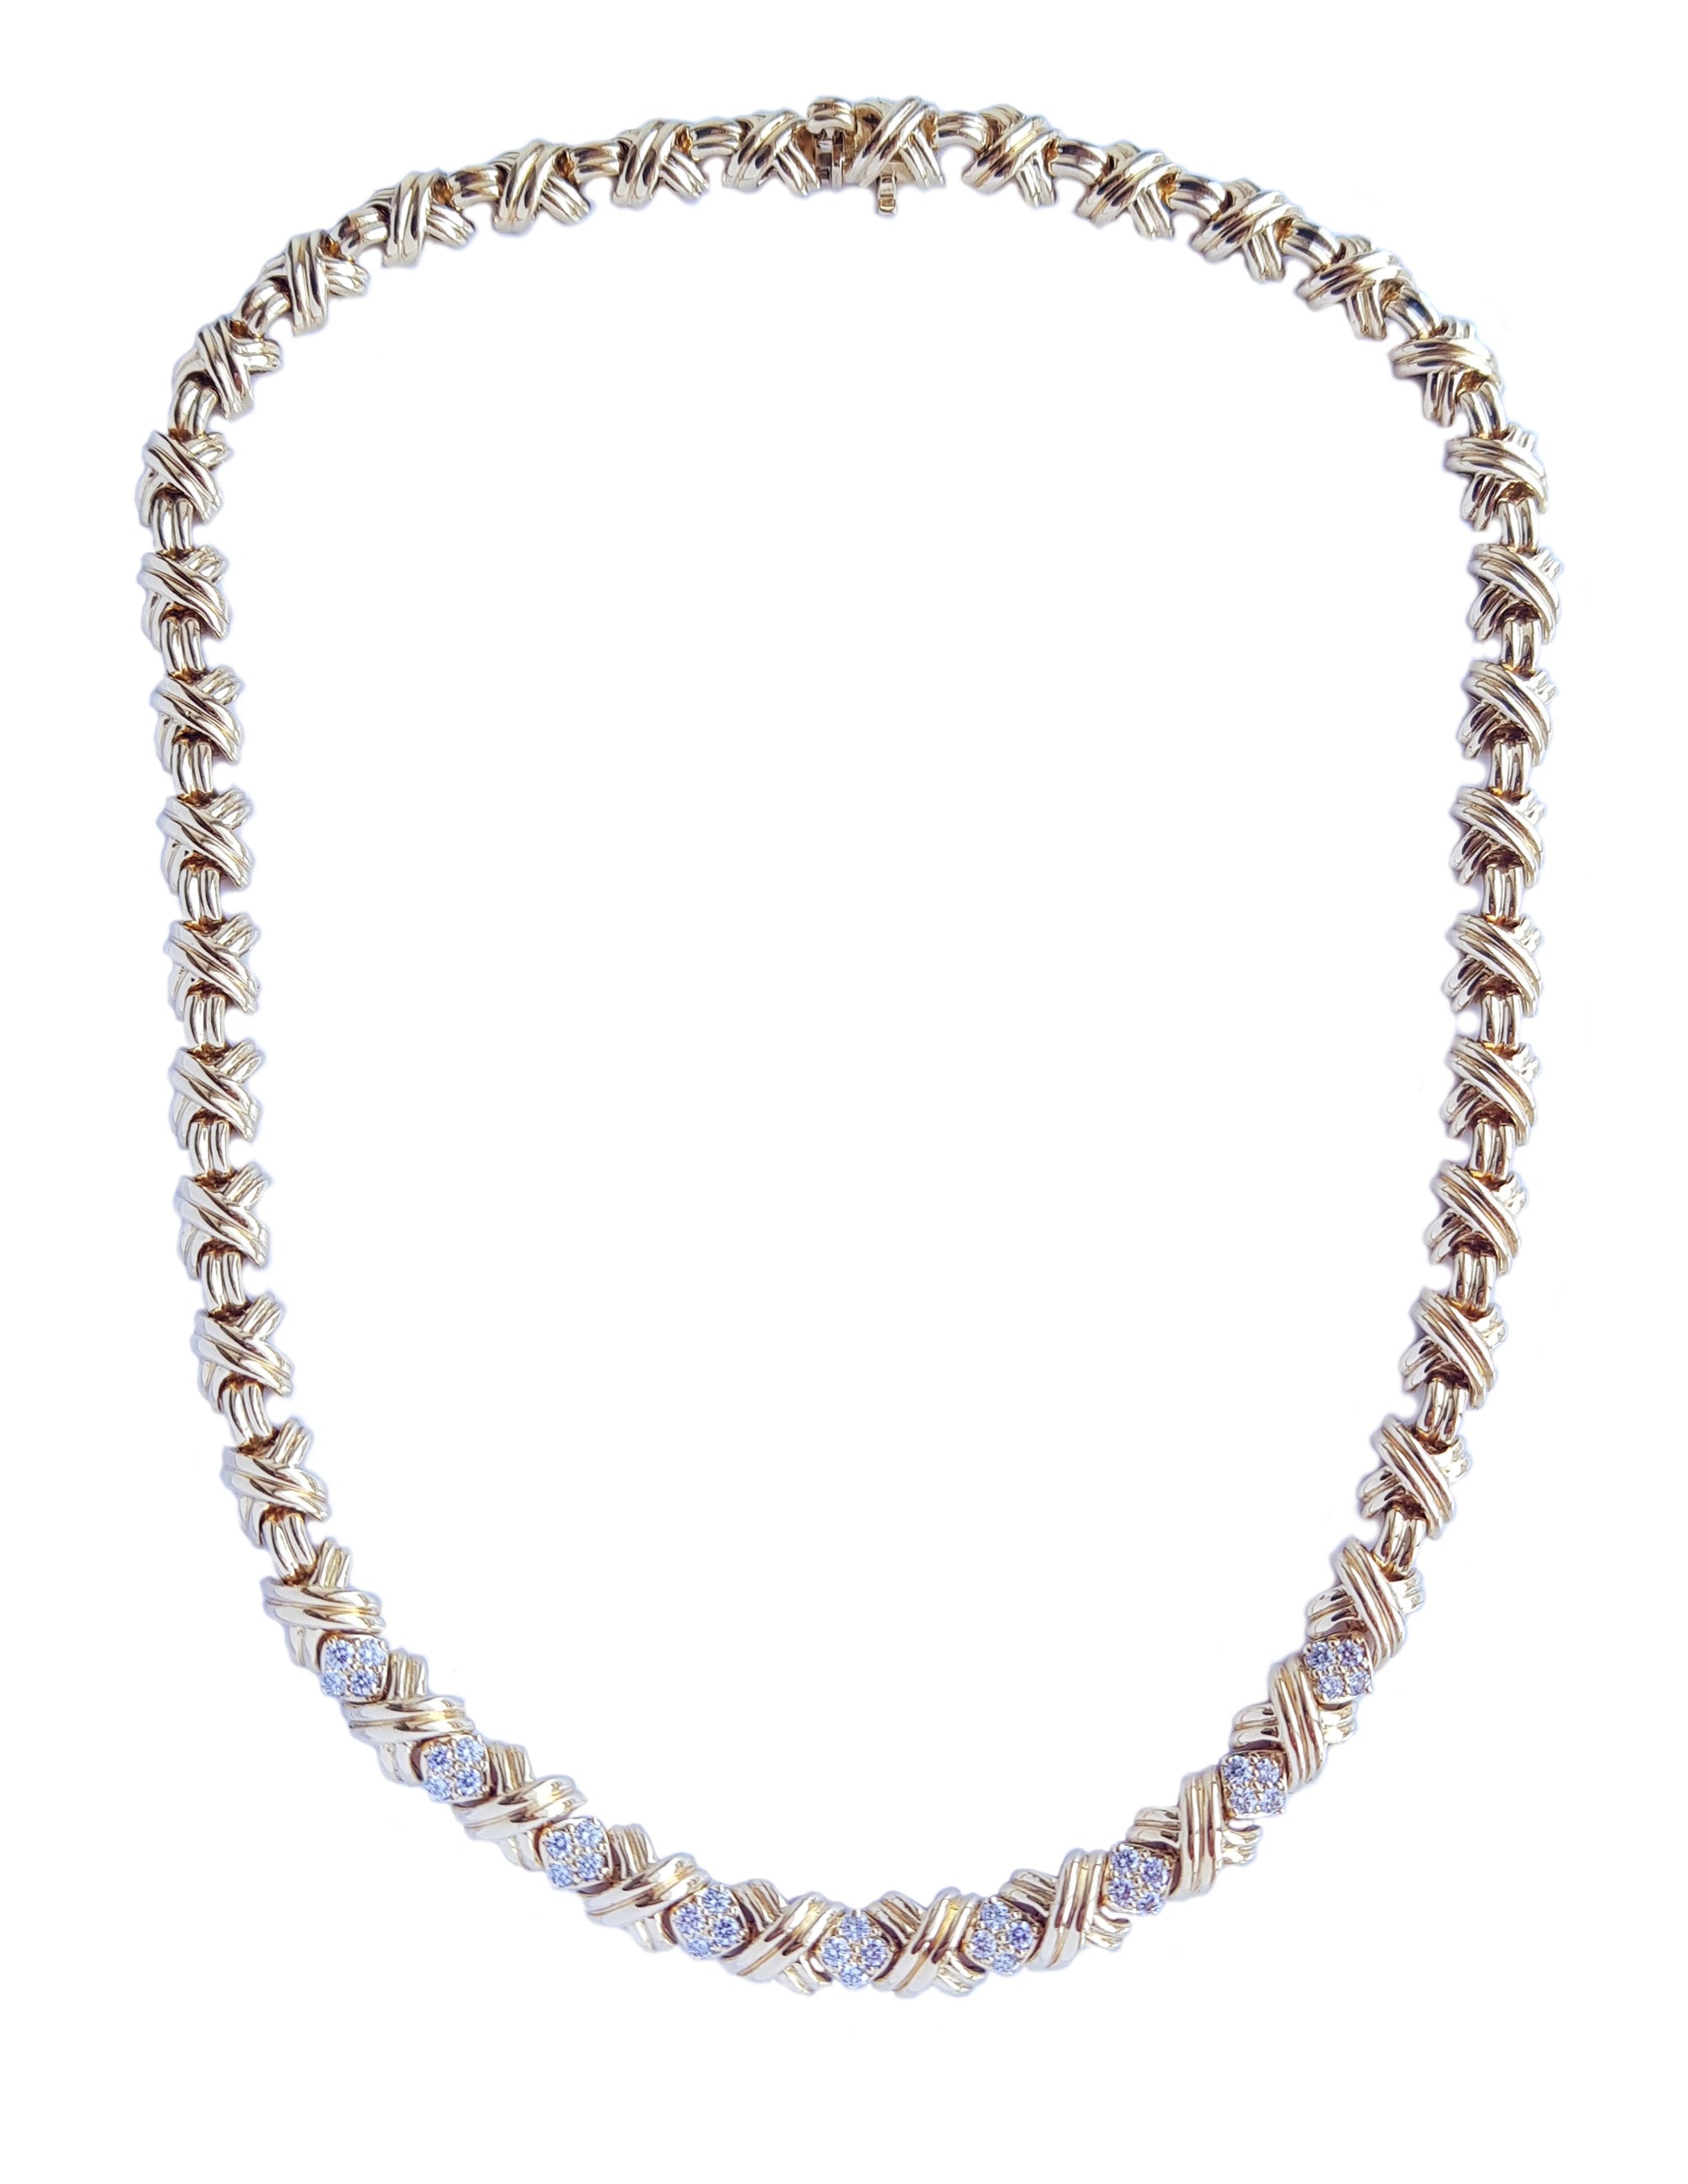 Tiffany & Co Signature X Diamond 18k Gold Necklace 16.5"